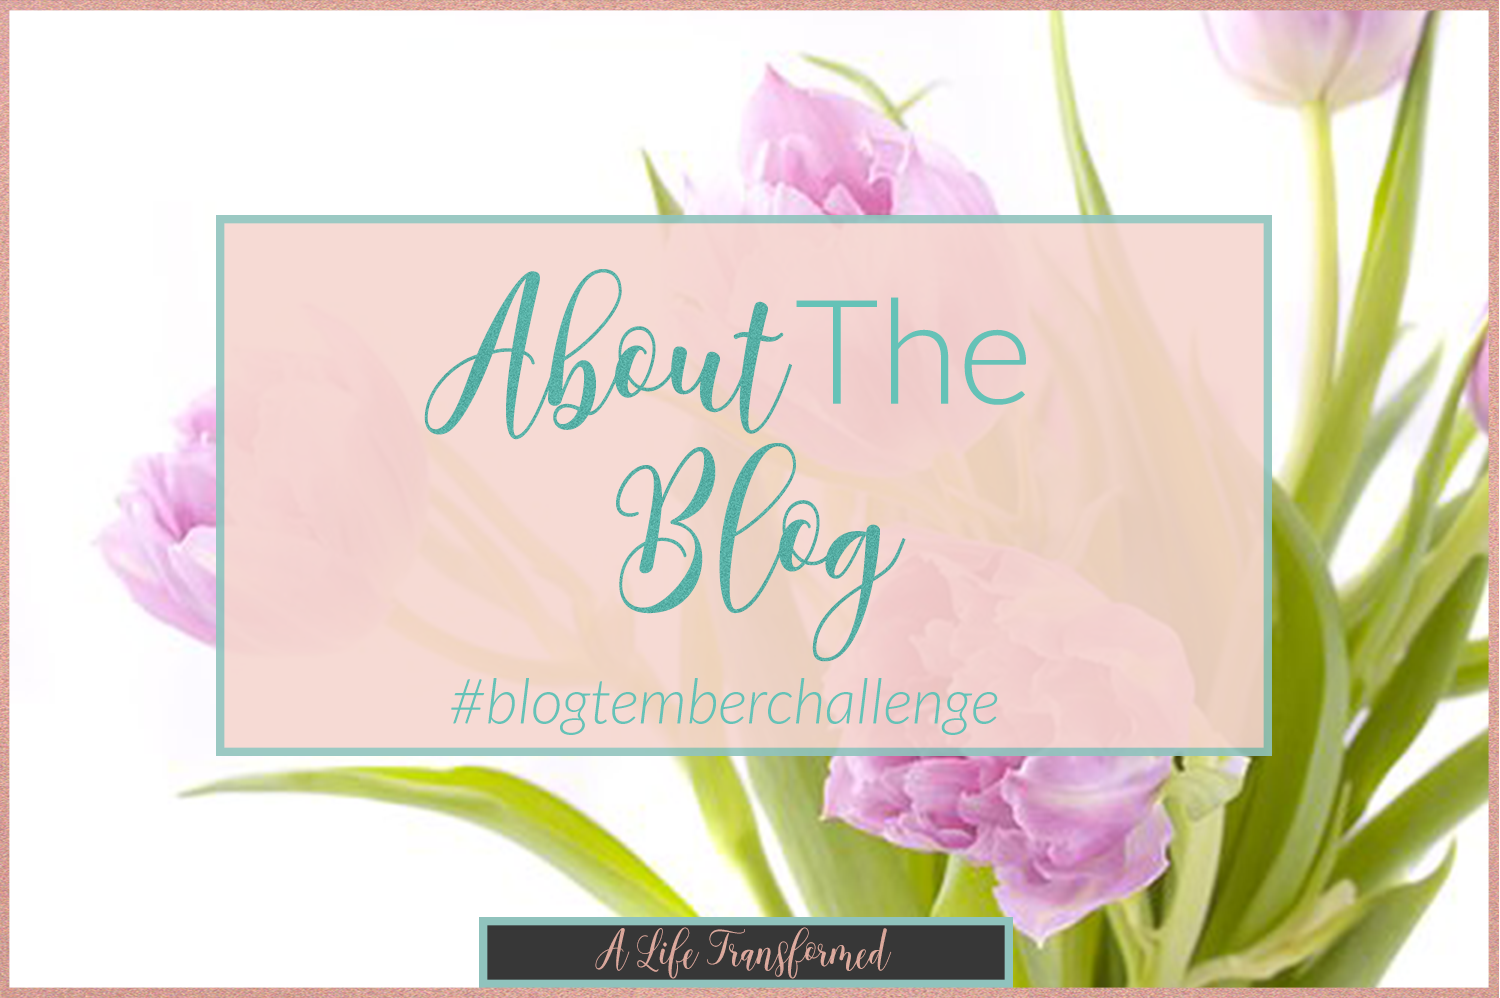 About-The-Blog-blogtemberchallenge